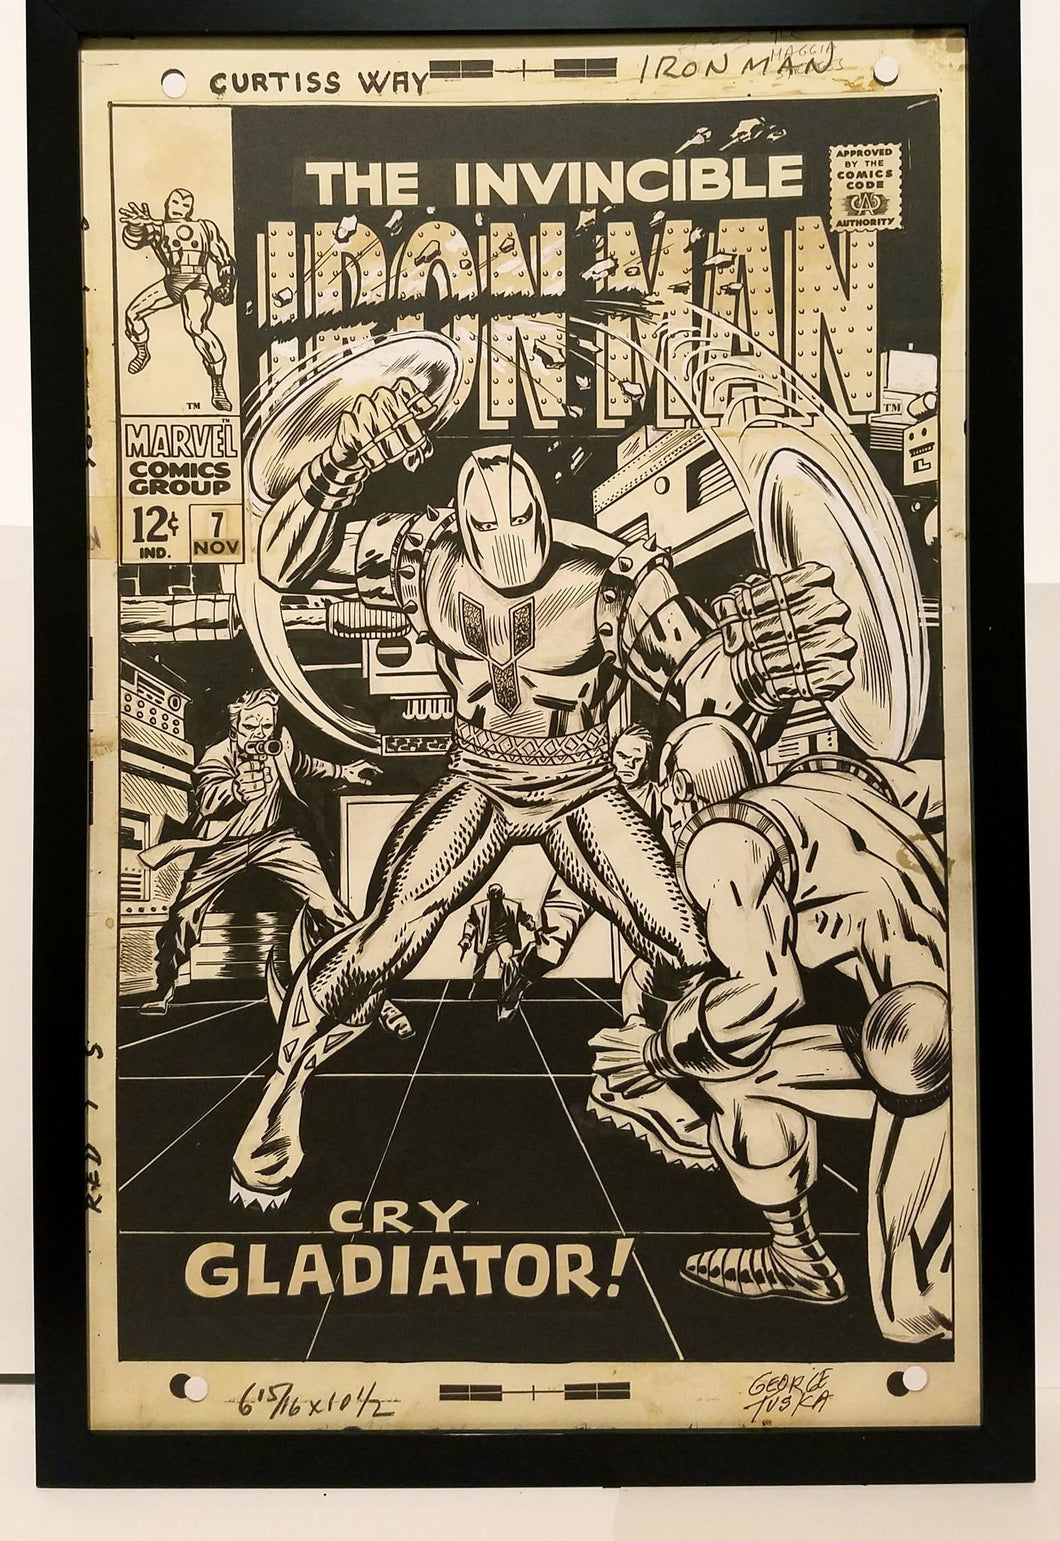 Iron Man #7 by George Tuska 11x17 FRAMED Original Art Poster Marvel Comics